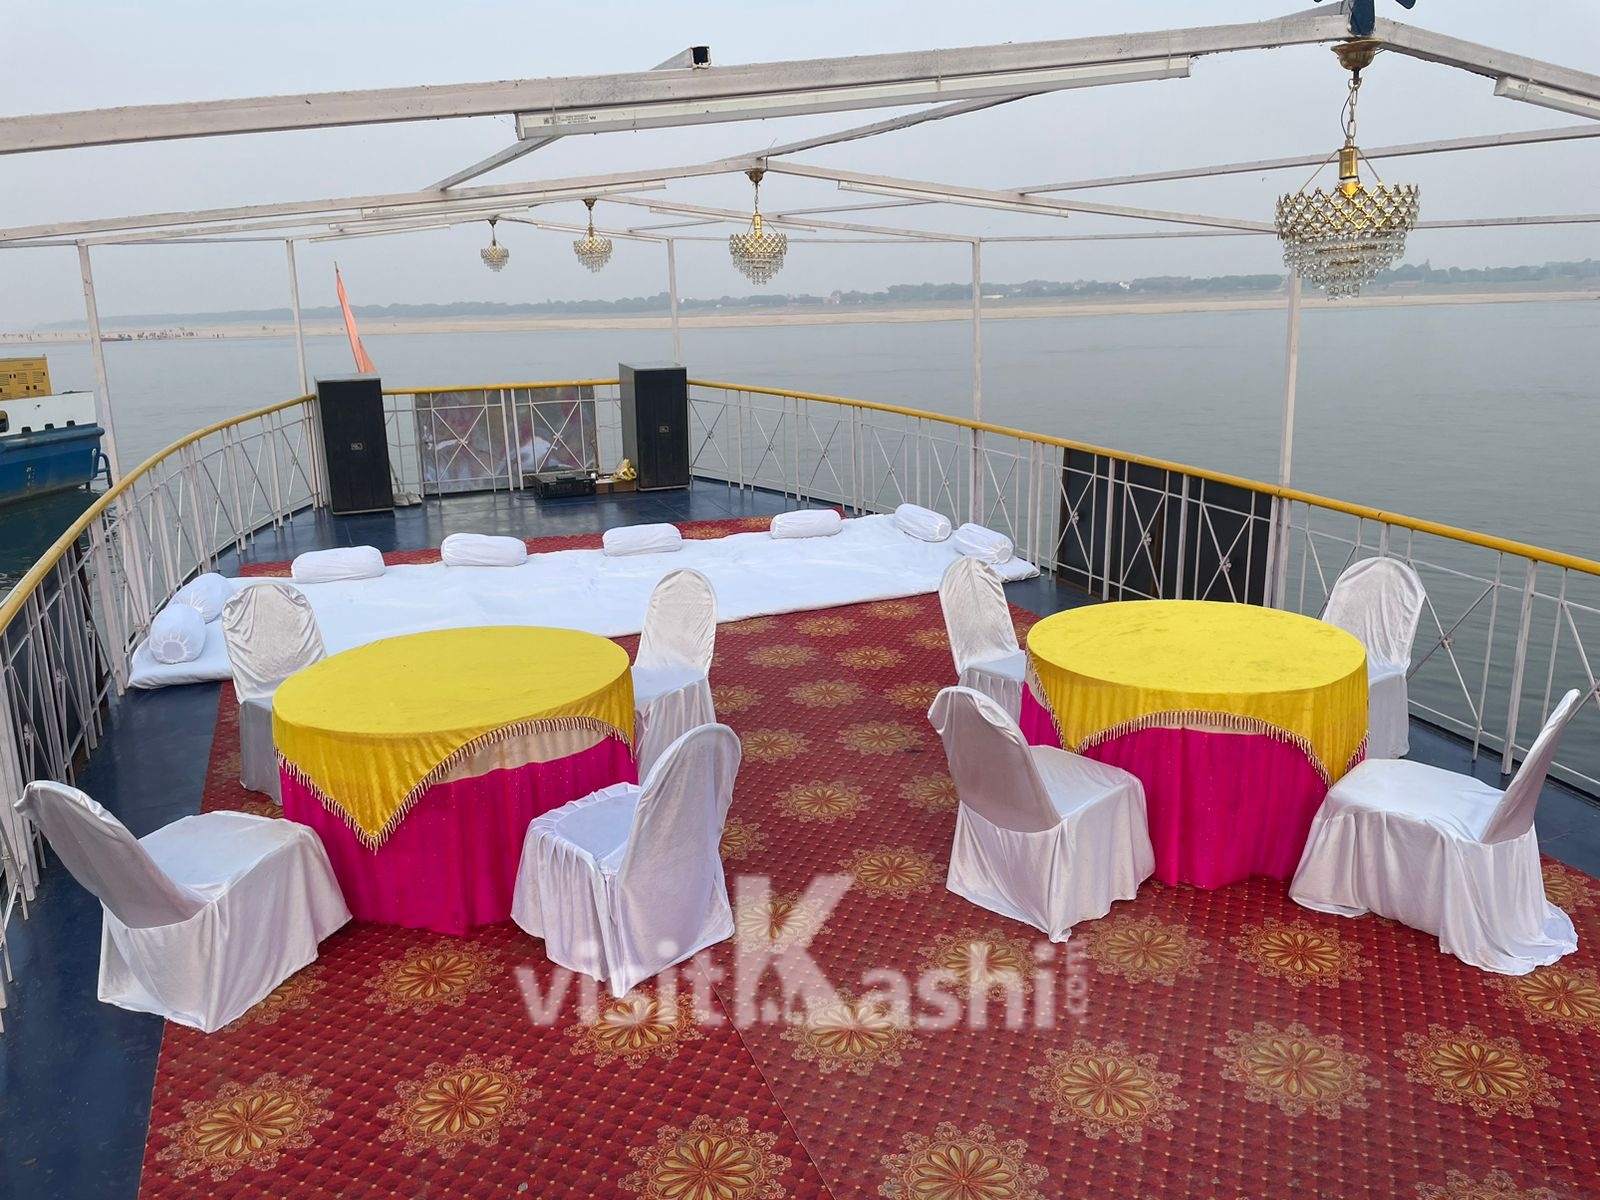 Bajra Varanasi Boat booking